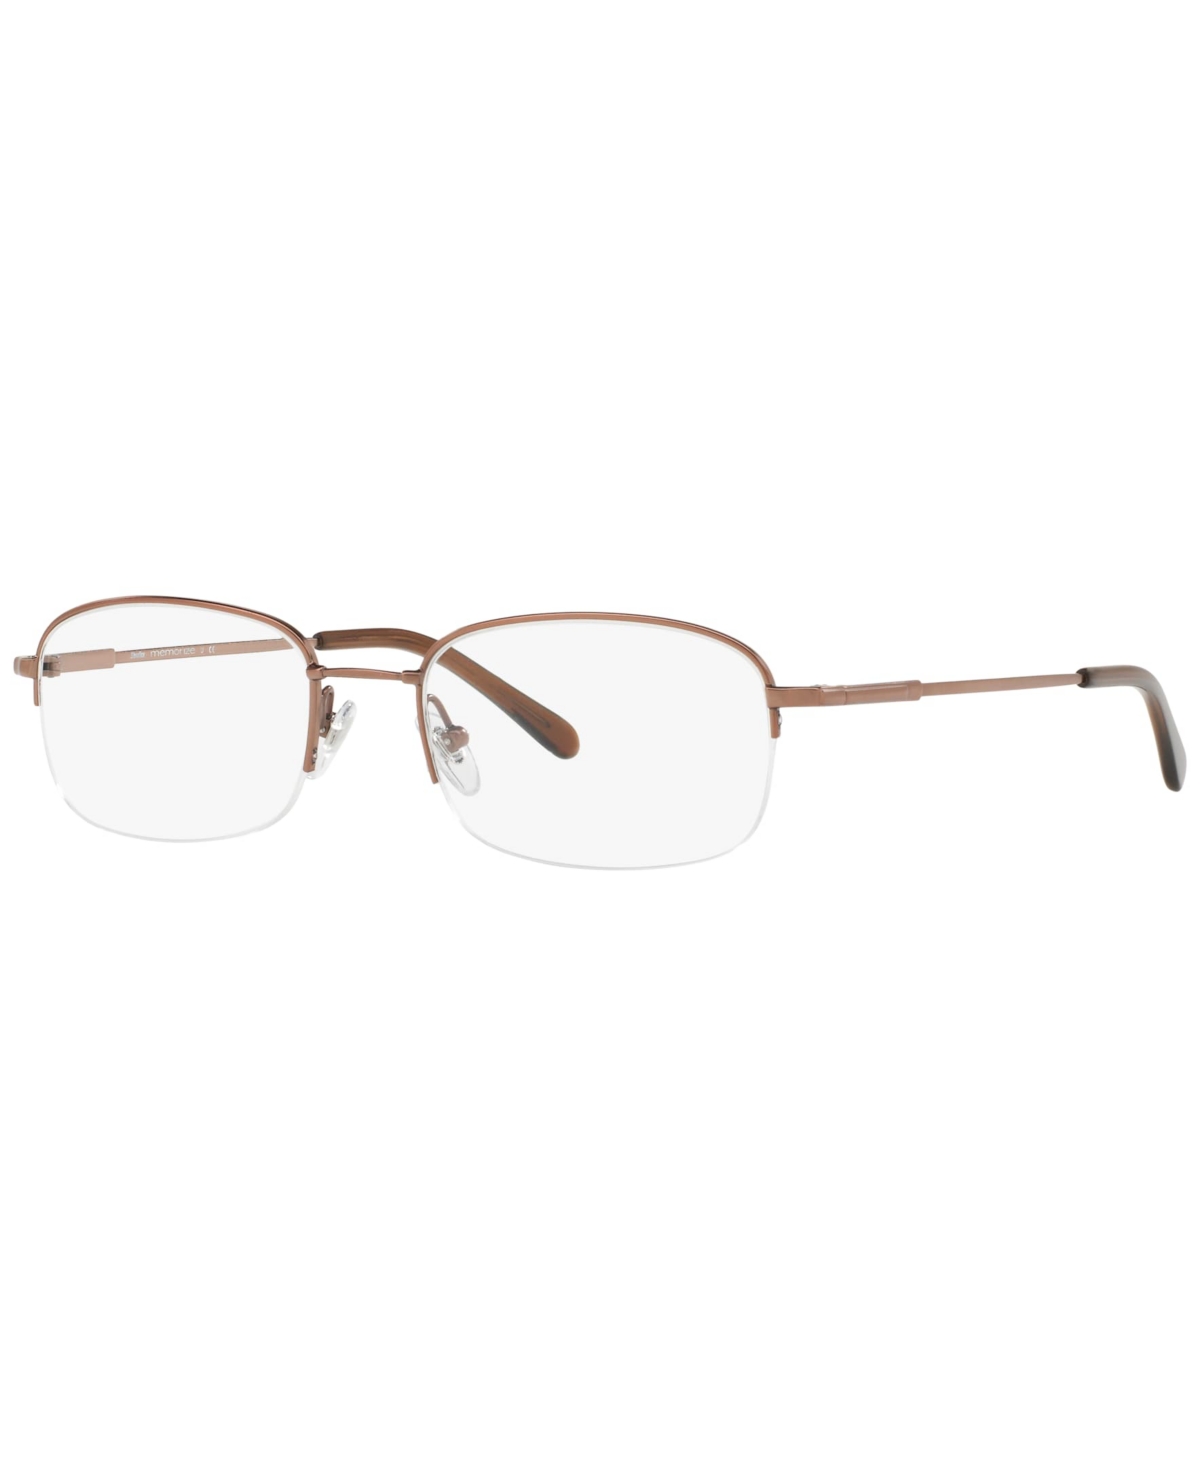 SF9001 Men's Pillow Eyeglasses - Matte Copper